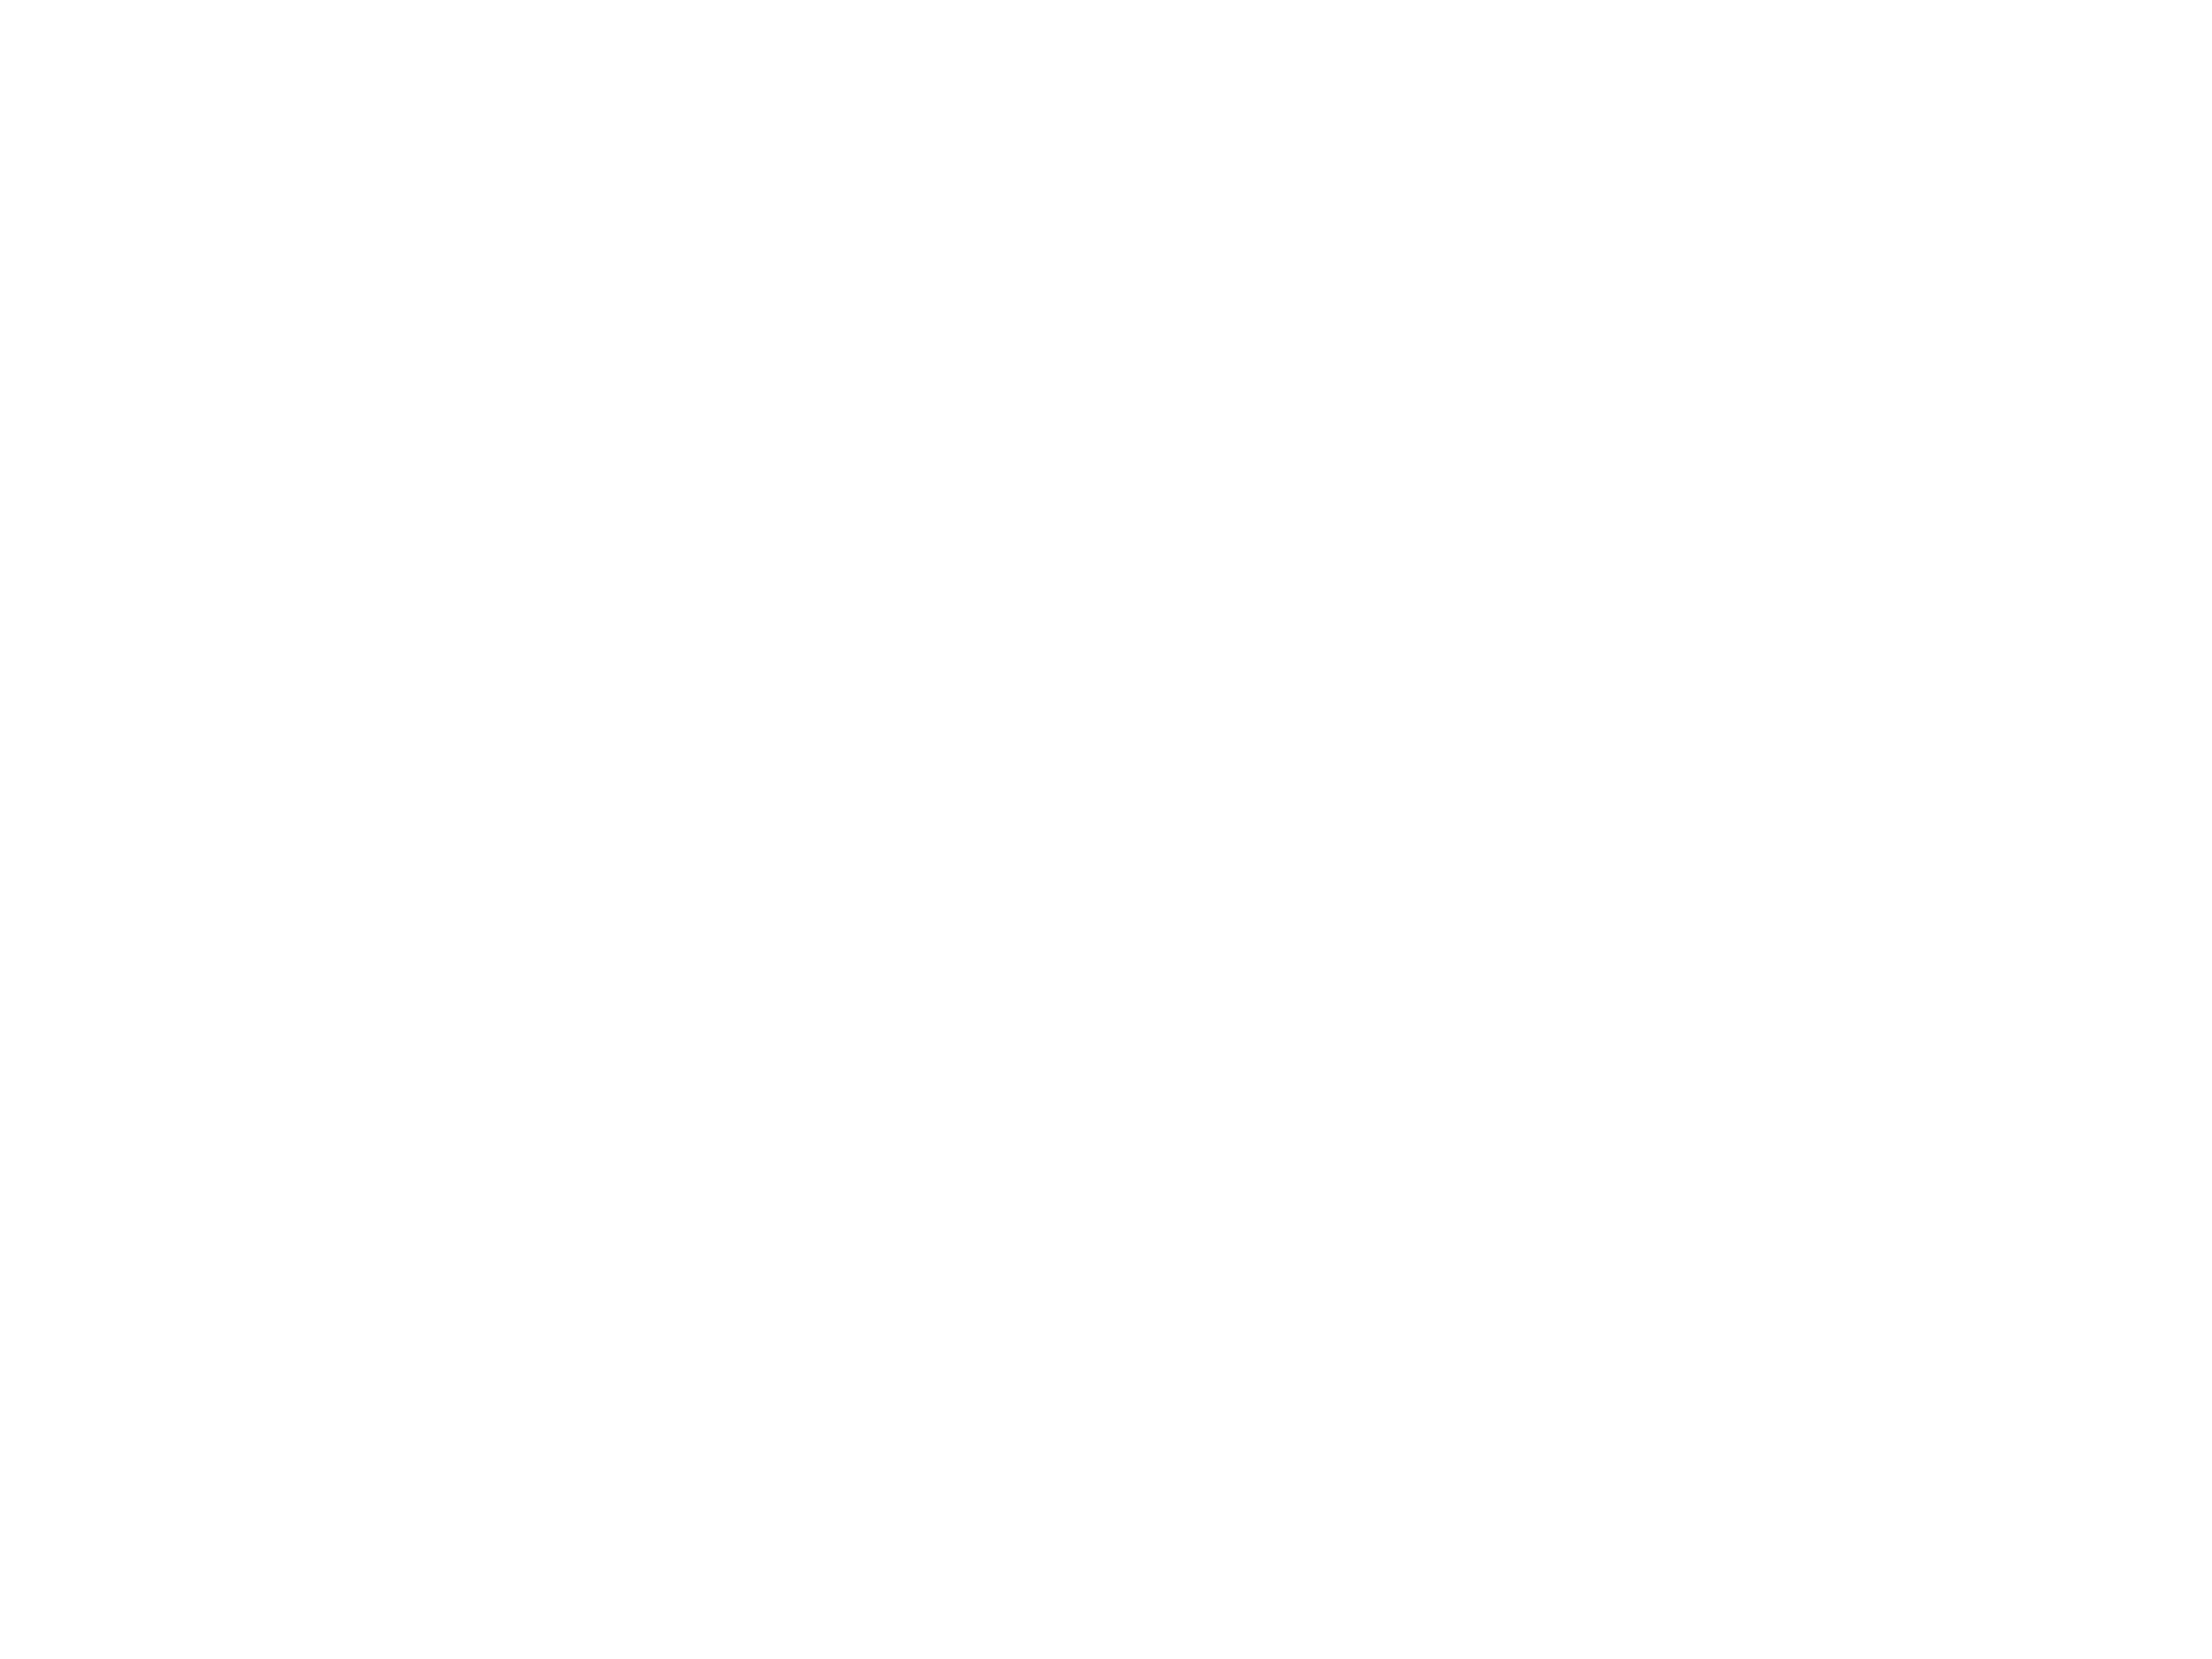 Home - Minnesota Craft Brewers Guild